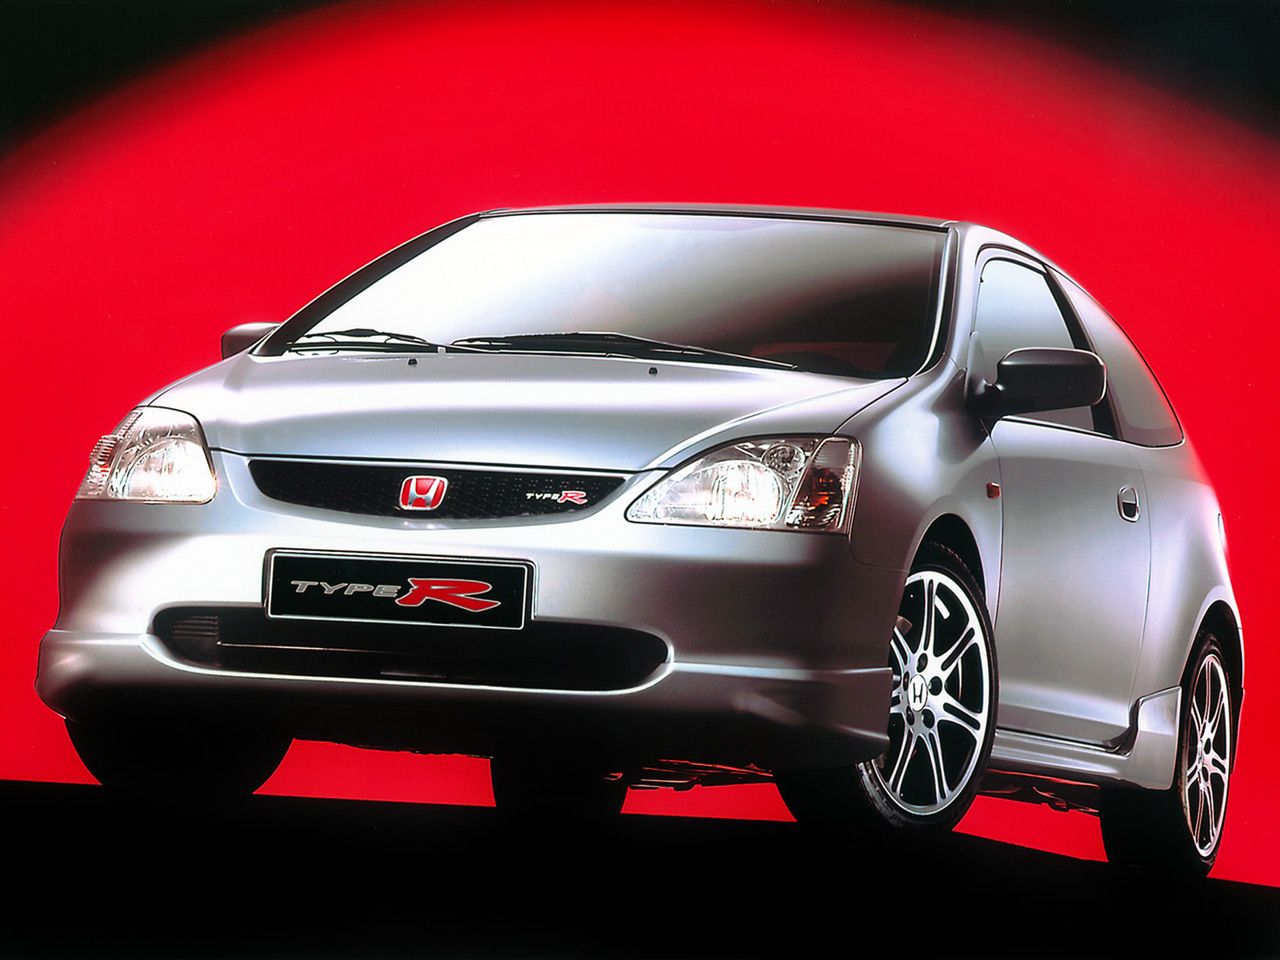 2001 Honda Civic Type R (EP3)